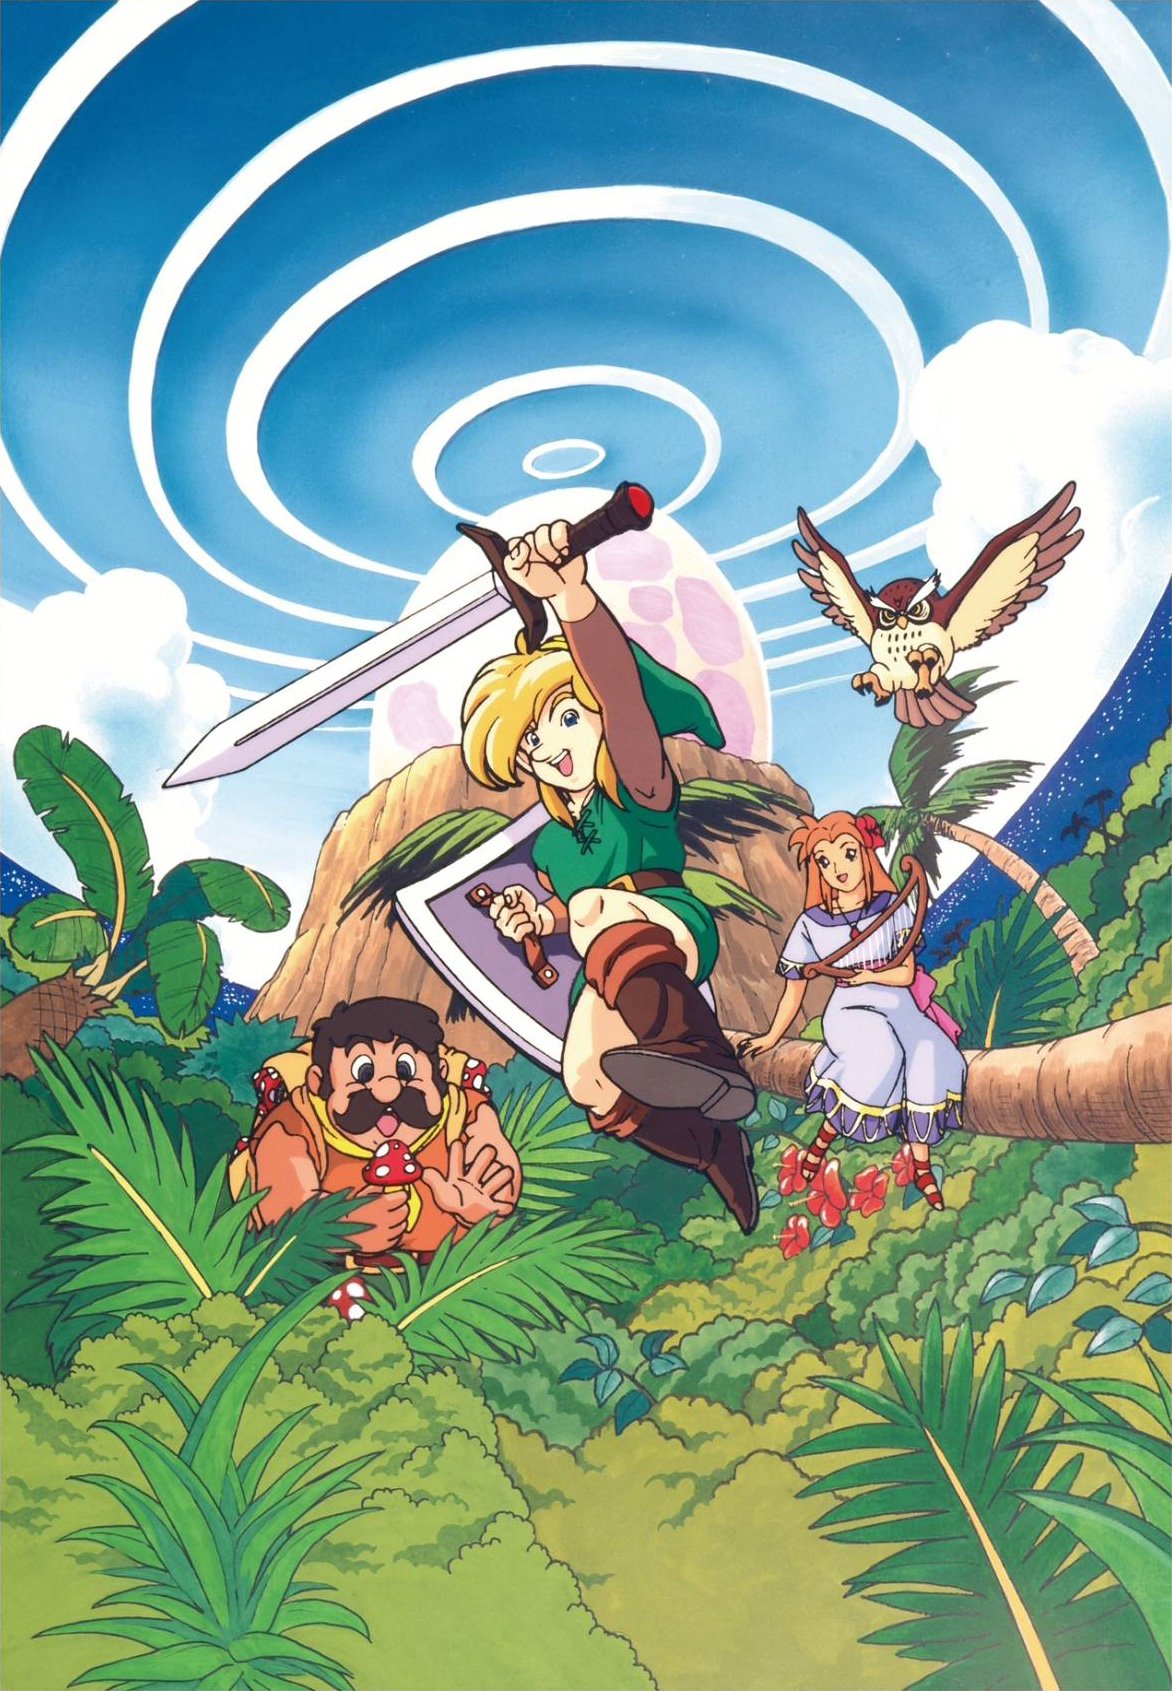 Zelda: Link's Awakening review: This beach adventure looks 2019, feels 1993